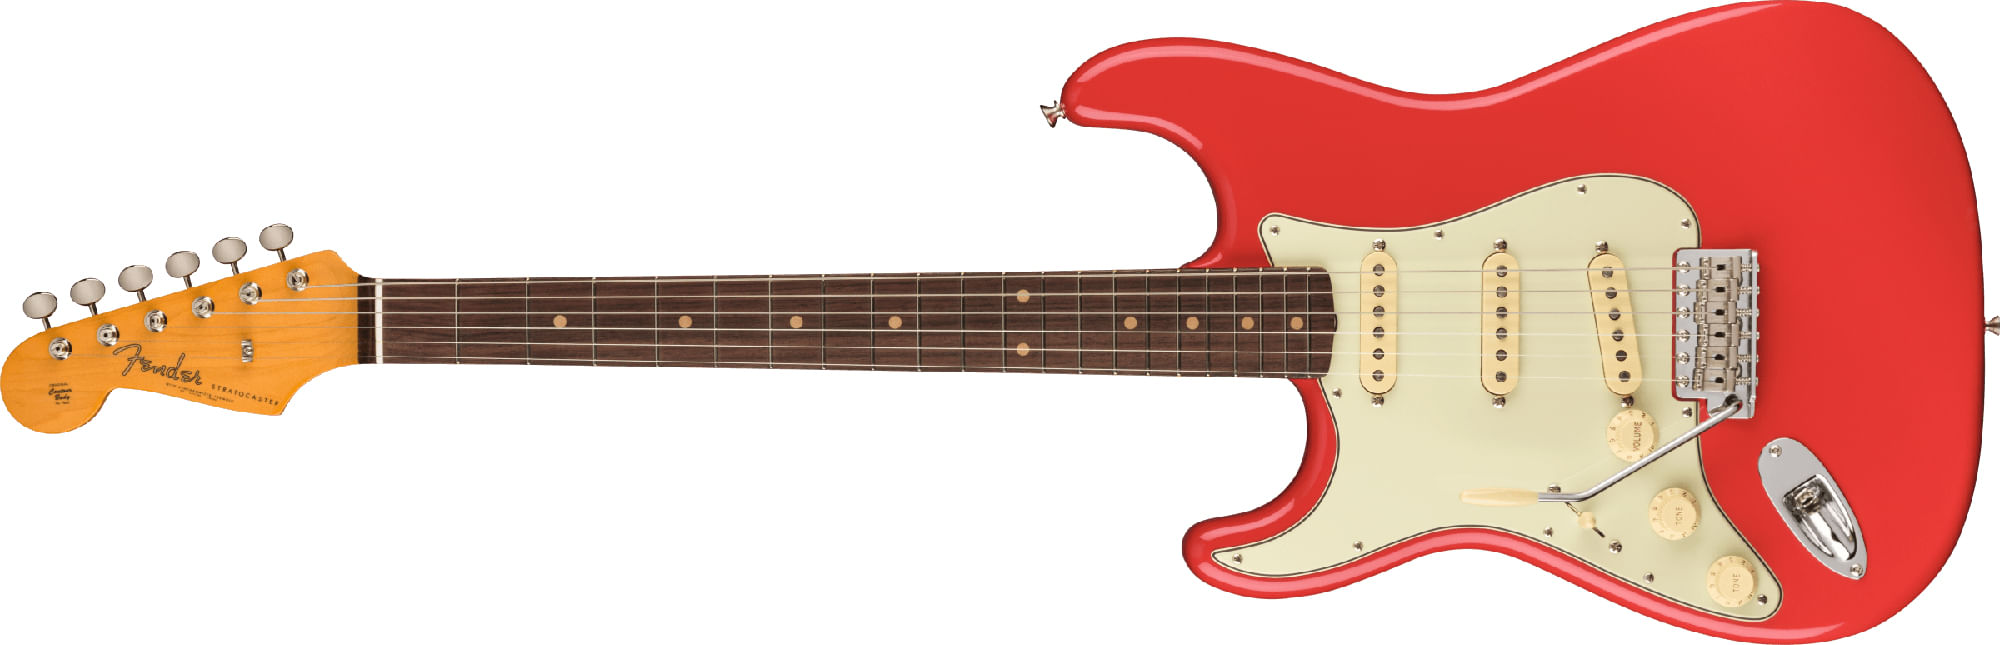 Fender American Vintage II 1961 Stratocaster - Rosewood, Fiesta Red, Left